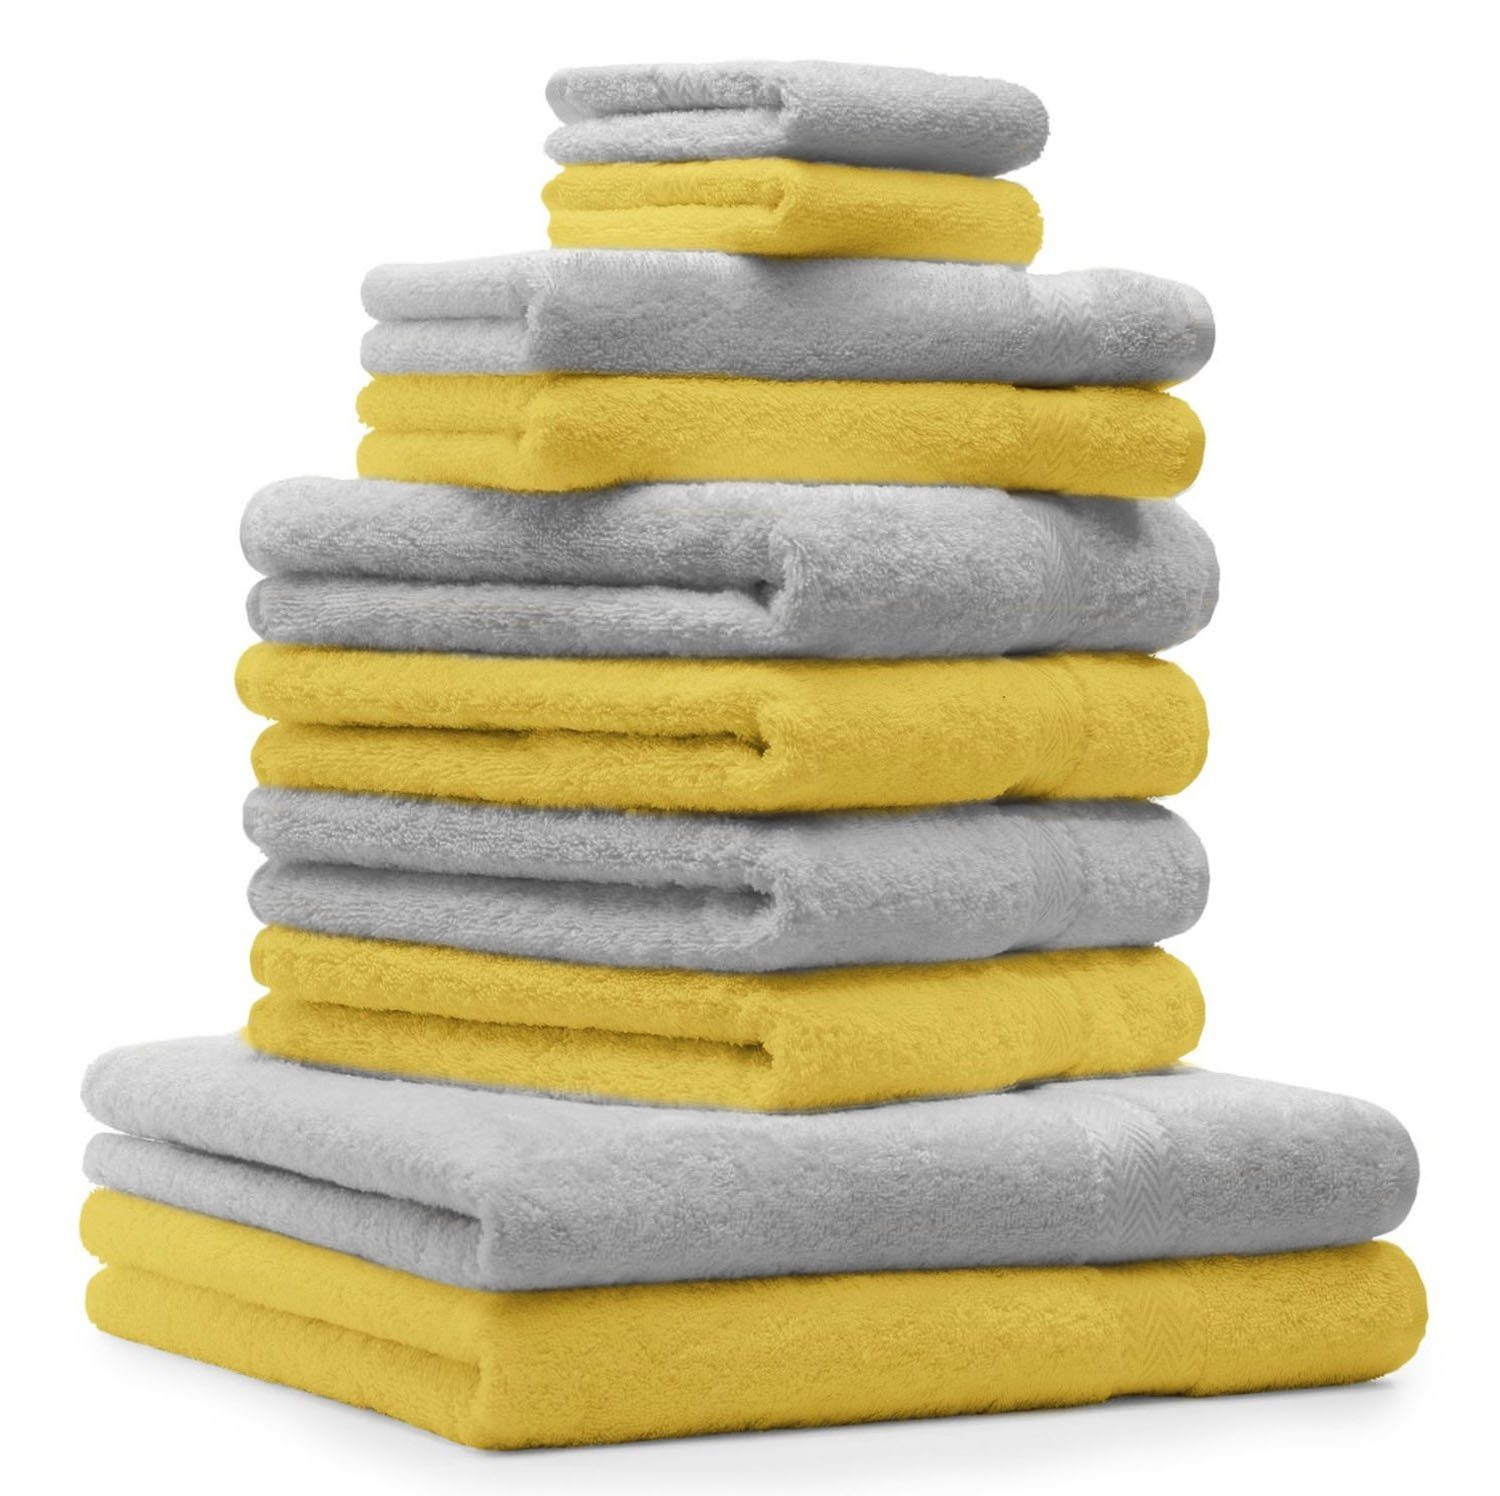 Betz Handtuch Set 10-TLG. Handtuch-Set Premium 100% Baumwolle 2 Duschtücher 4 Handtücher 2 Gästetücher 2 Waschhandschuhe Farbe Silber Grau & Gelb, 100% Baumwolle